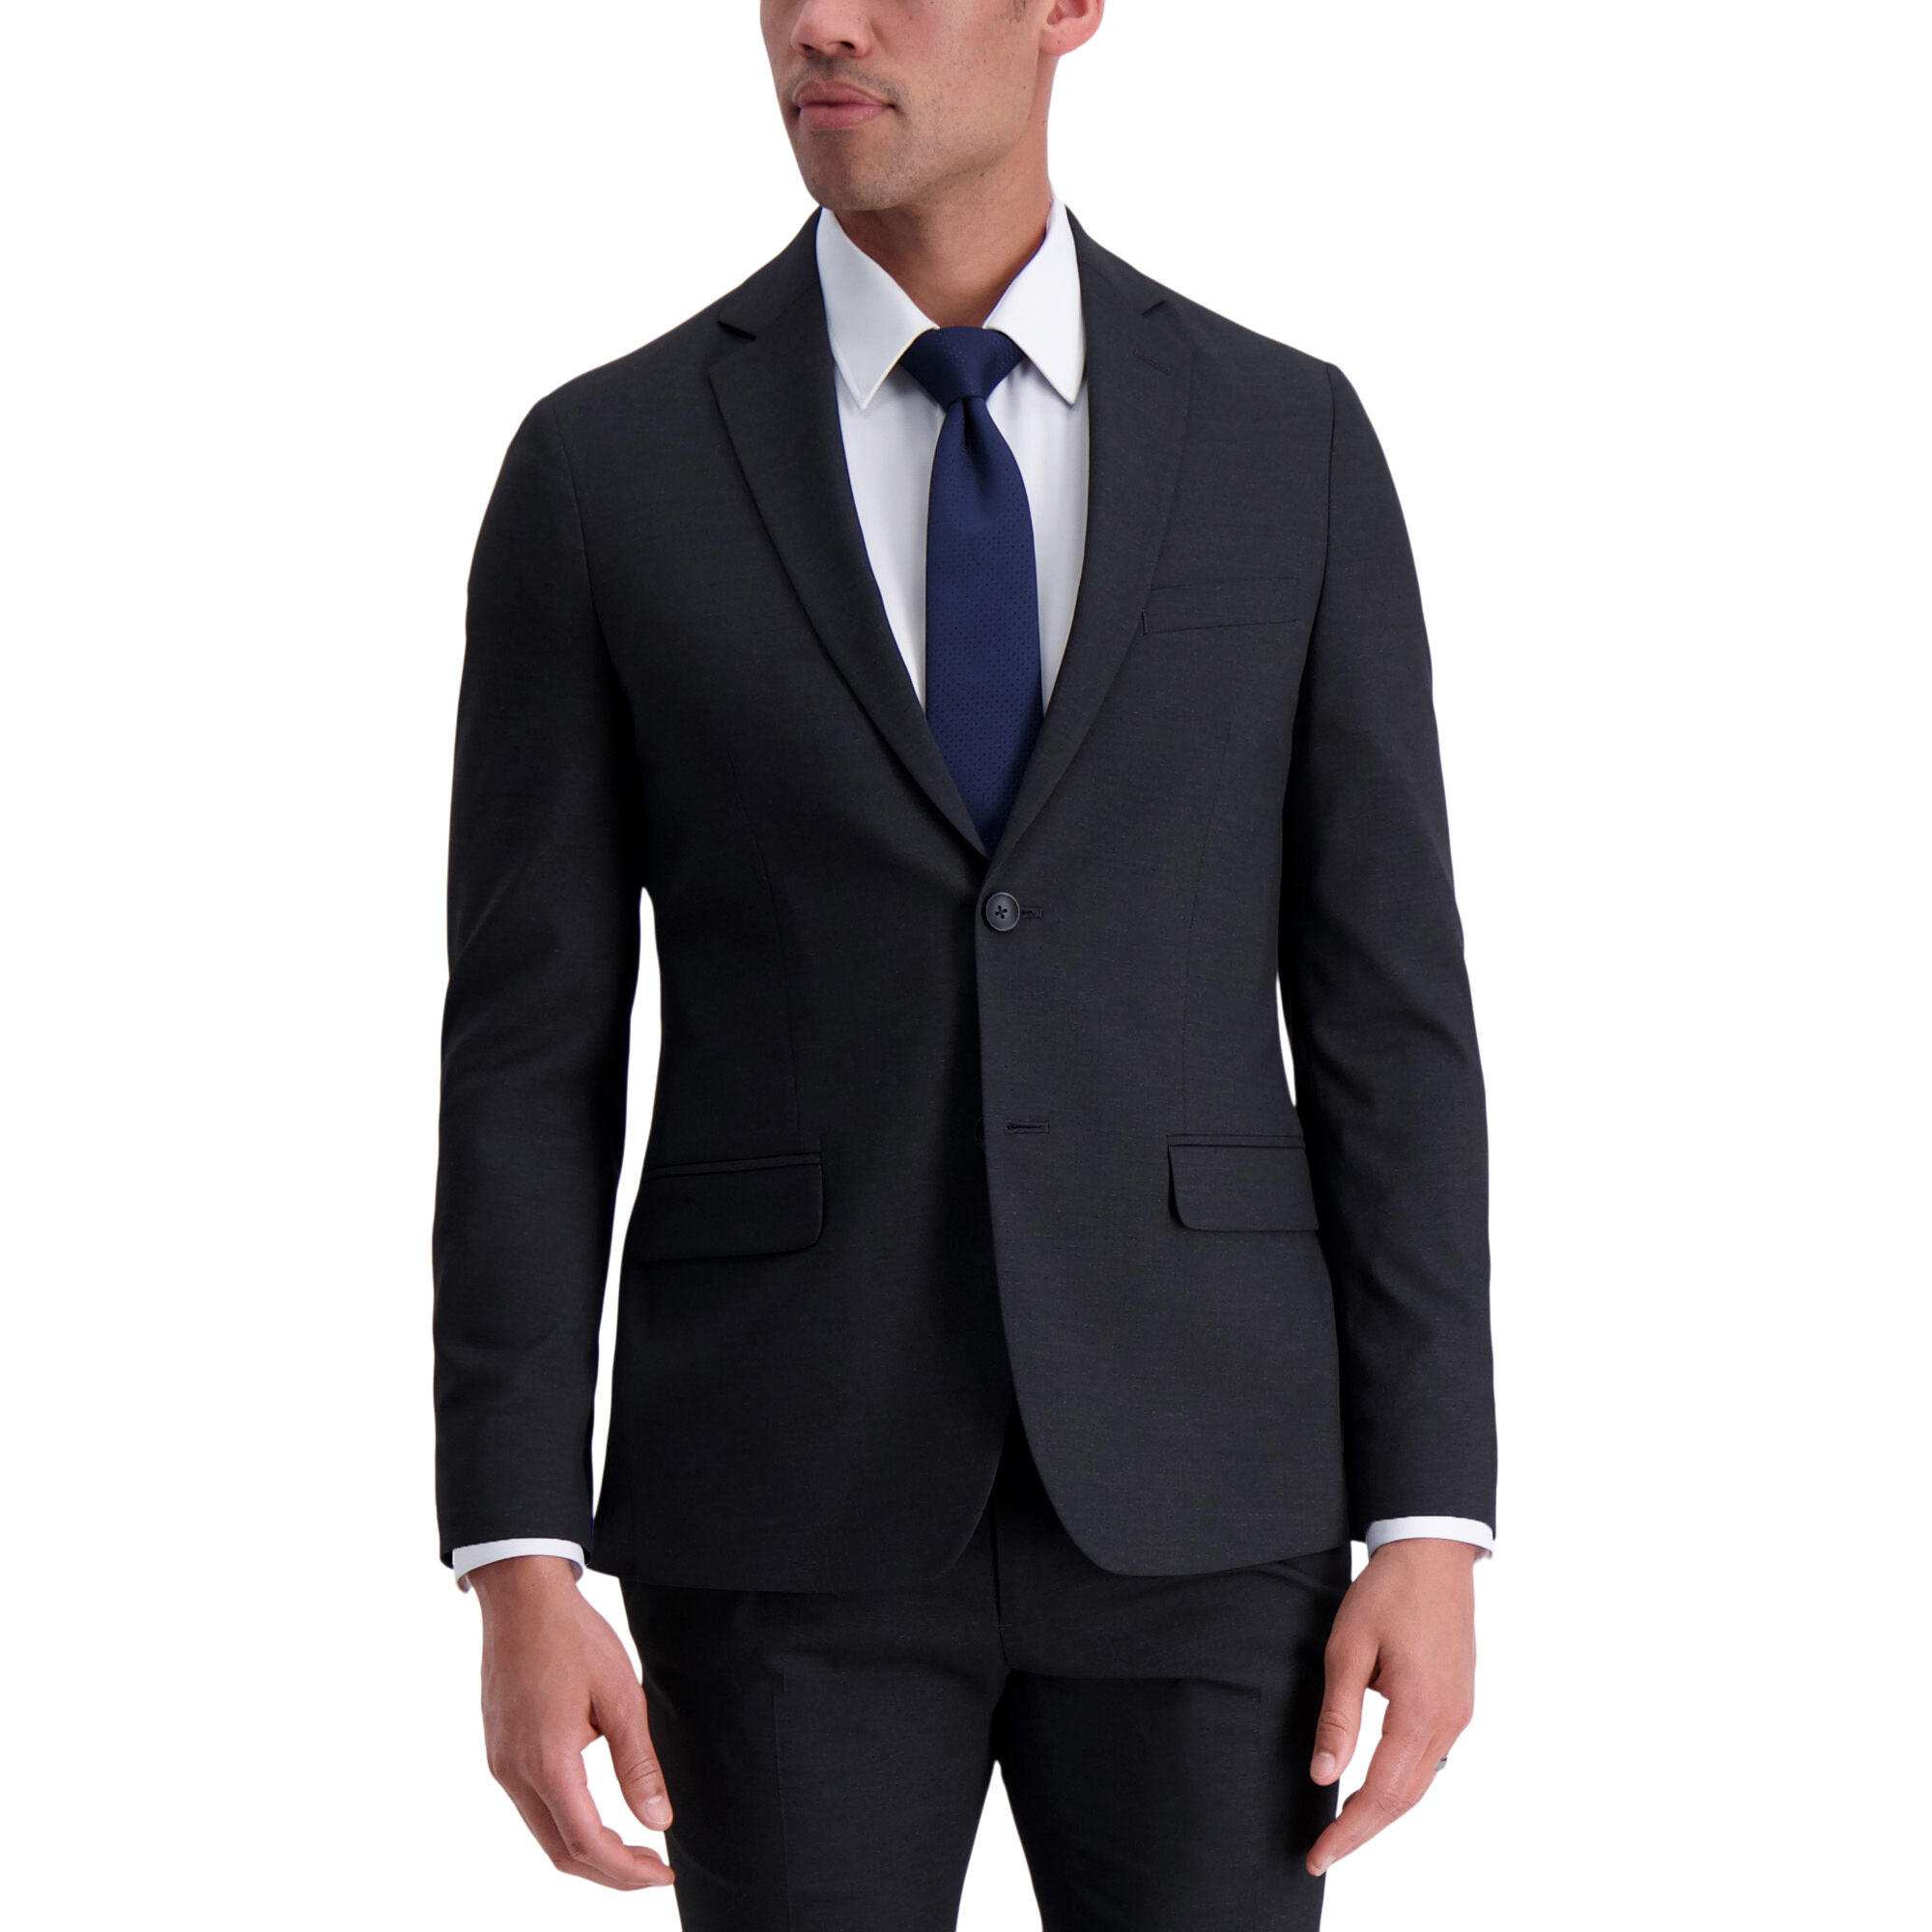 J.M. Haggar Ultra Slim Suit Jacket Charcoal Htr (HZ30965 Clothing Suits) photo